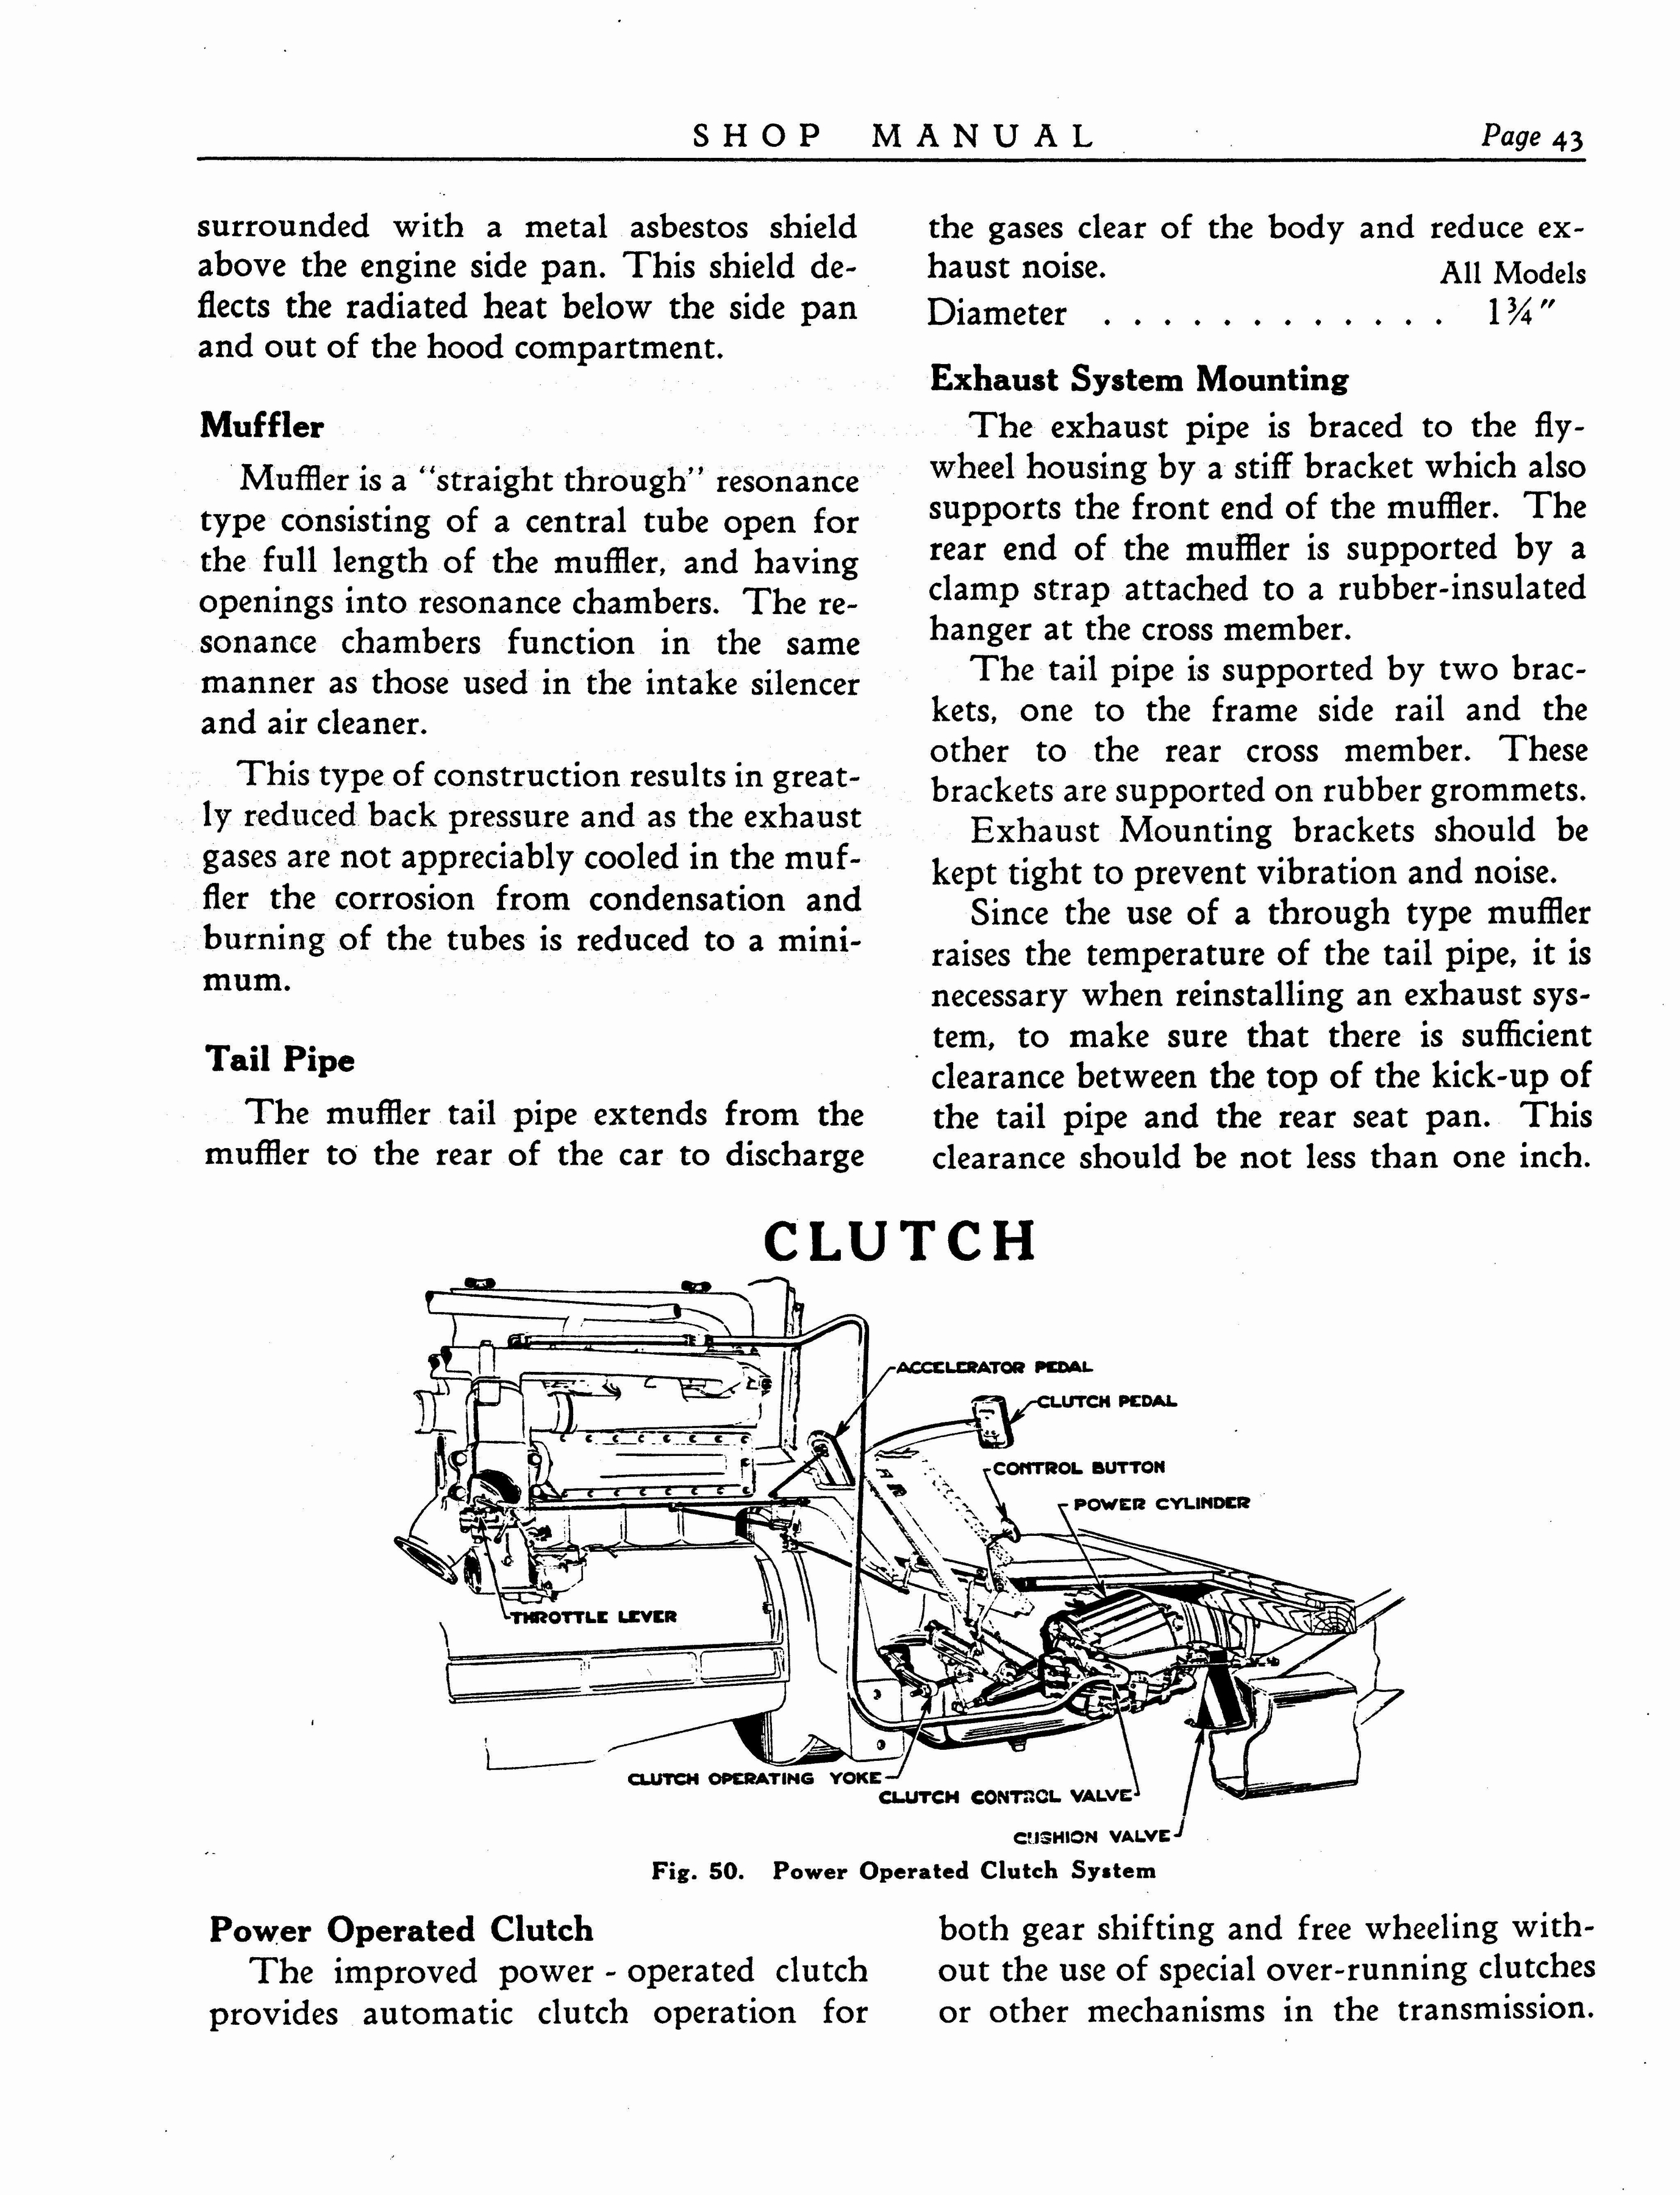 n_1933 Buick Shop Manual_Page_044.jpg